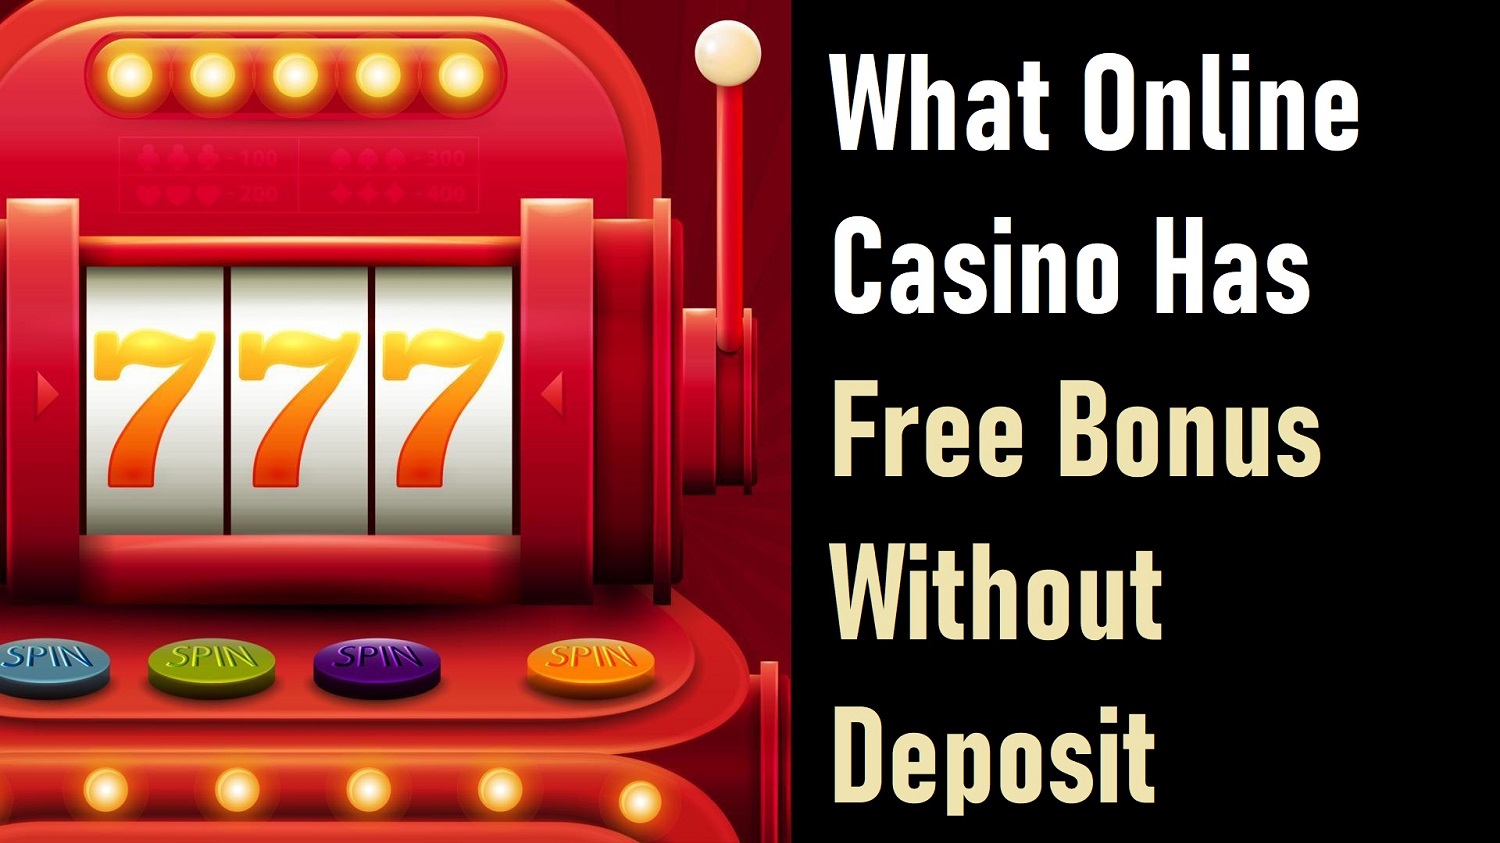 What Online Casino Has Free Bonus Without Deposit